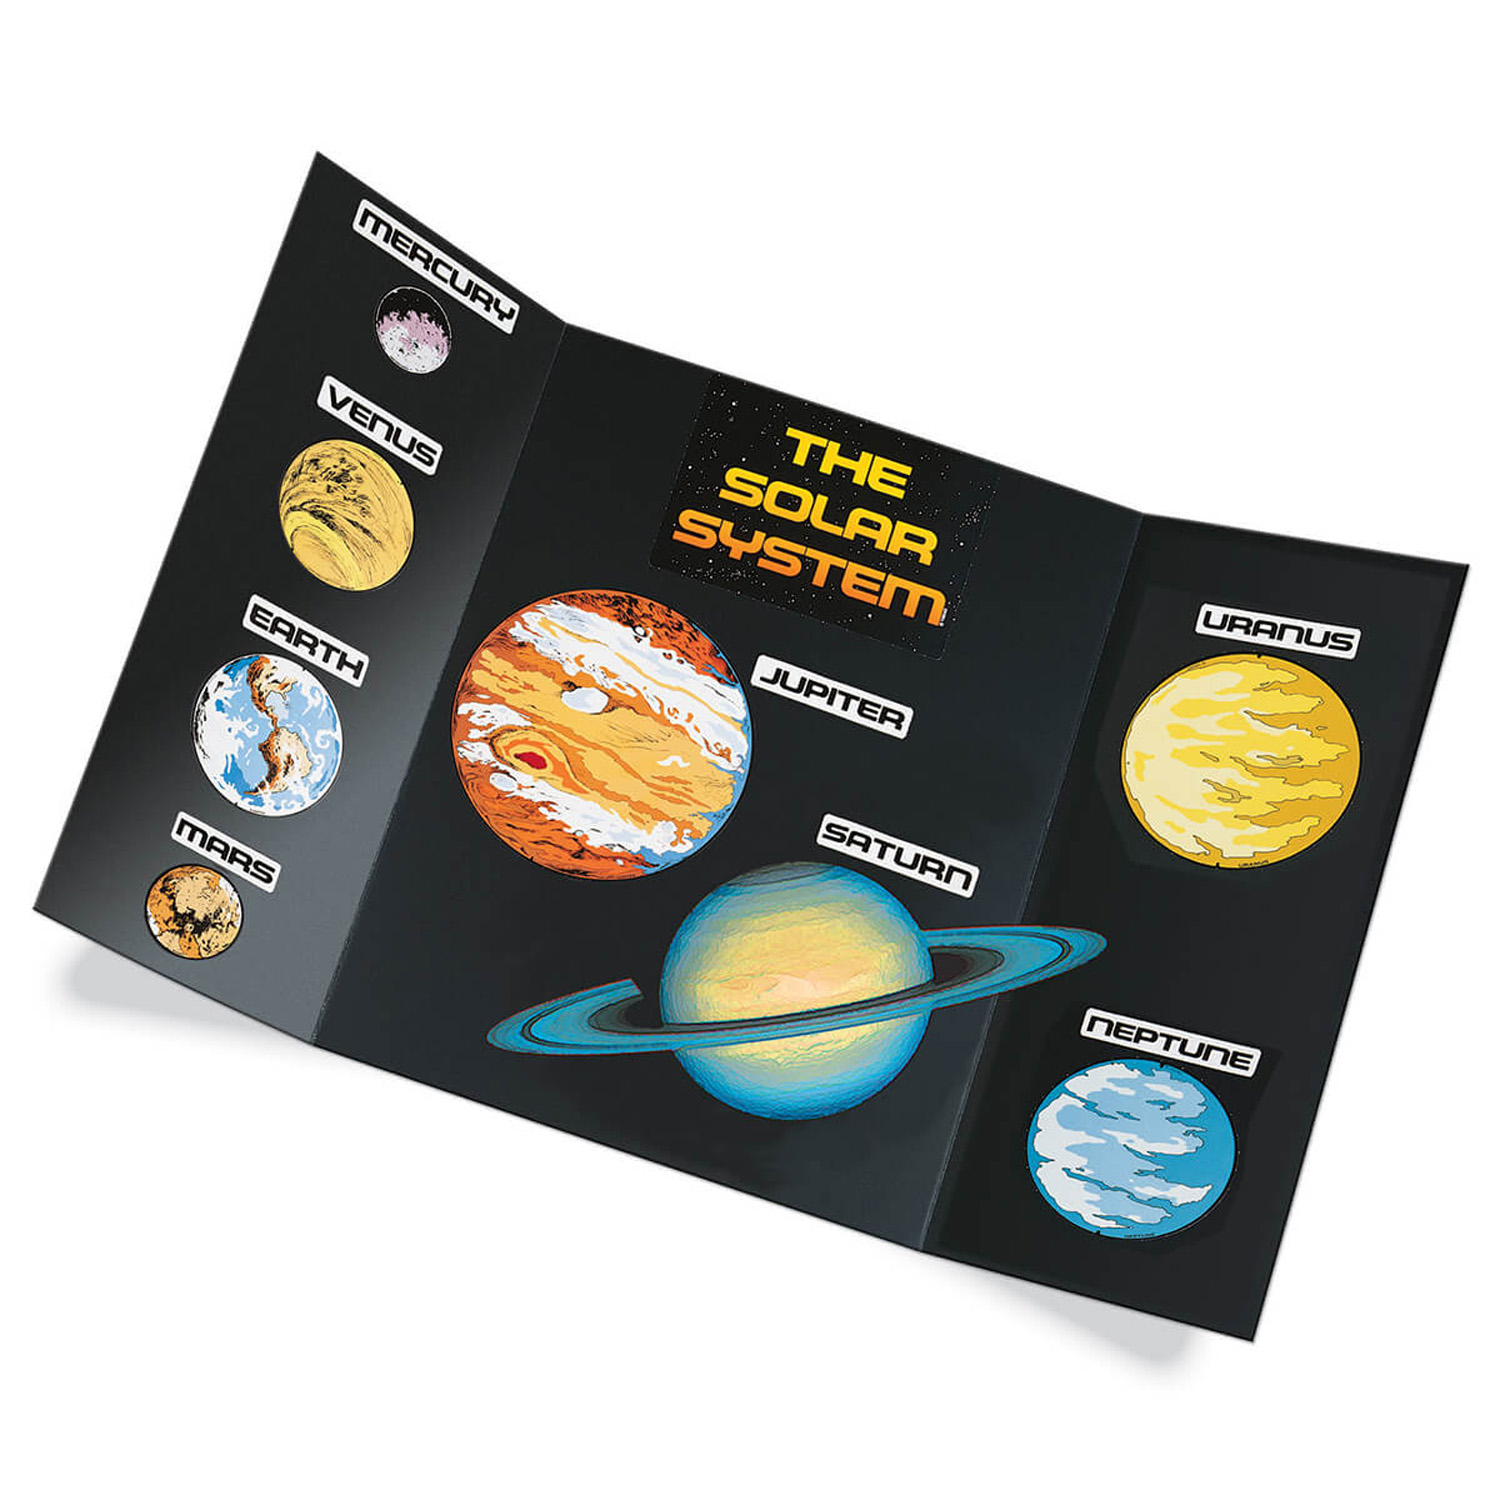 Pacon Science Fair Presentation Board Kit